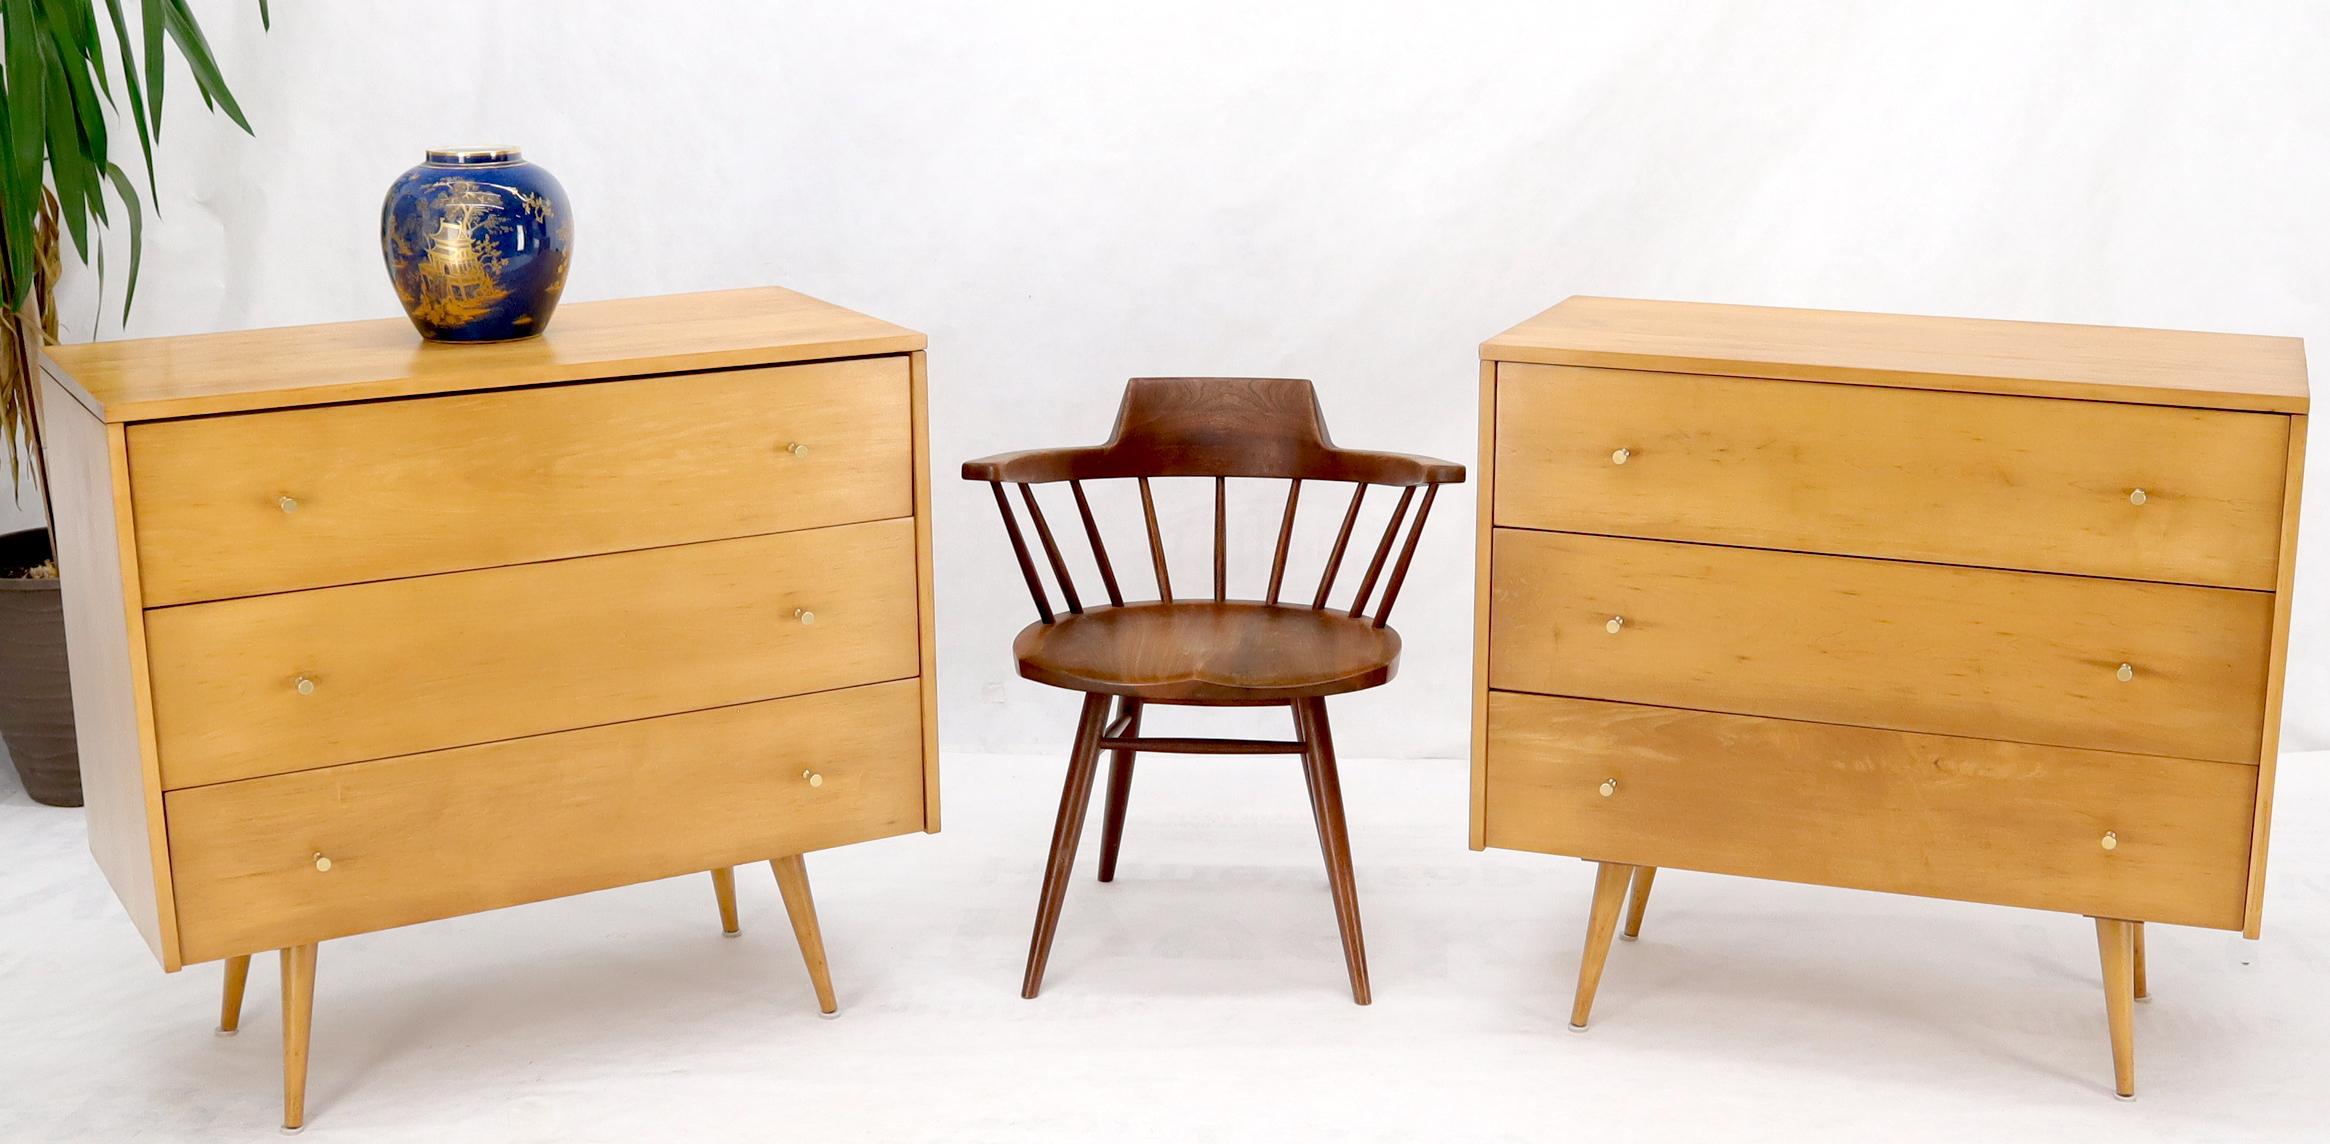 Pair of Mid-Century Modern solid birch three drawers dresser by Paul McCobb.